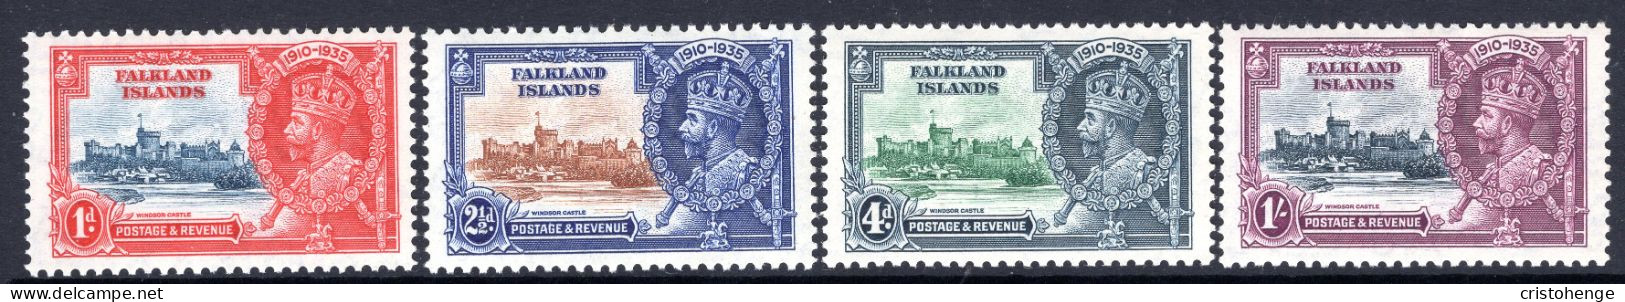 Falkland Islands 1935 KGVI Silver Jubilee Set LHM (SG 139-142) - Falkland Islands